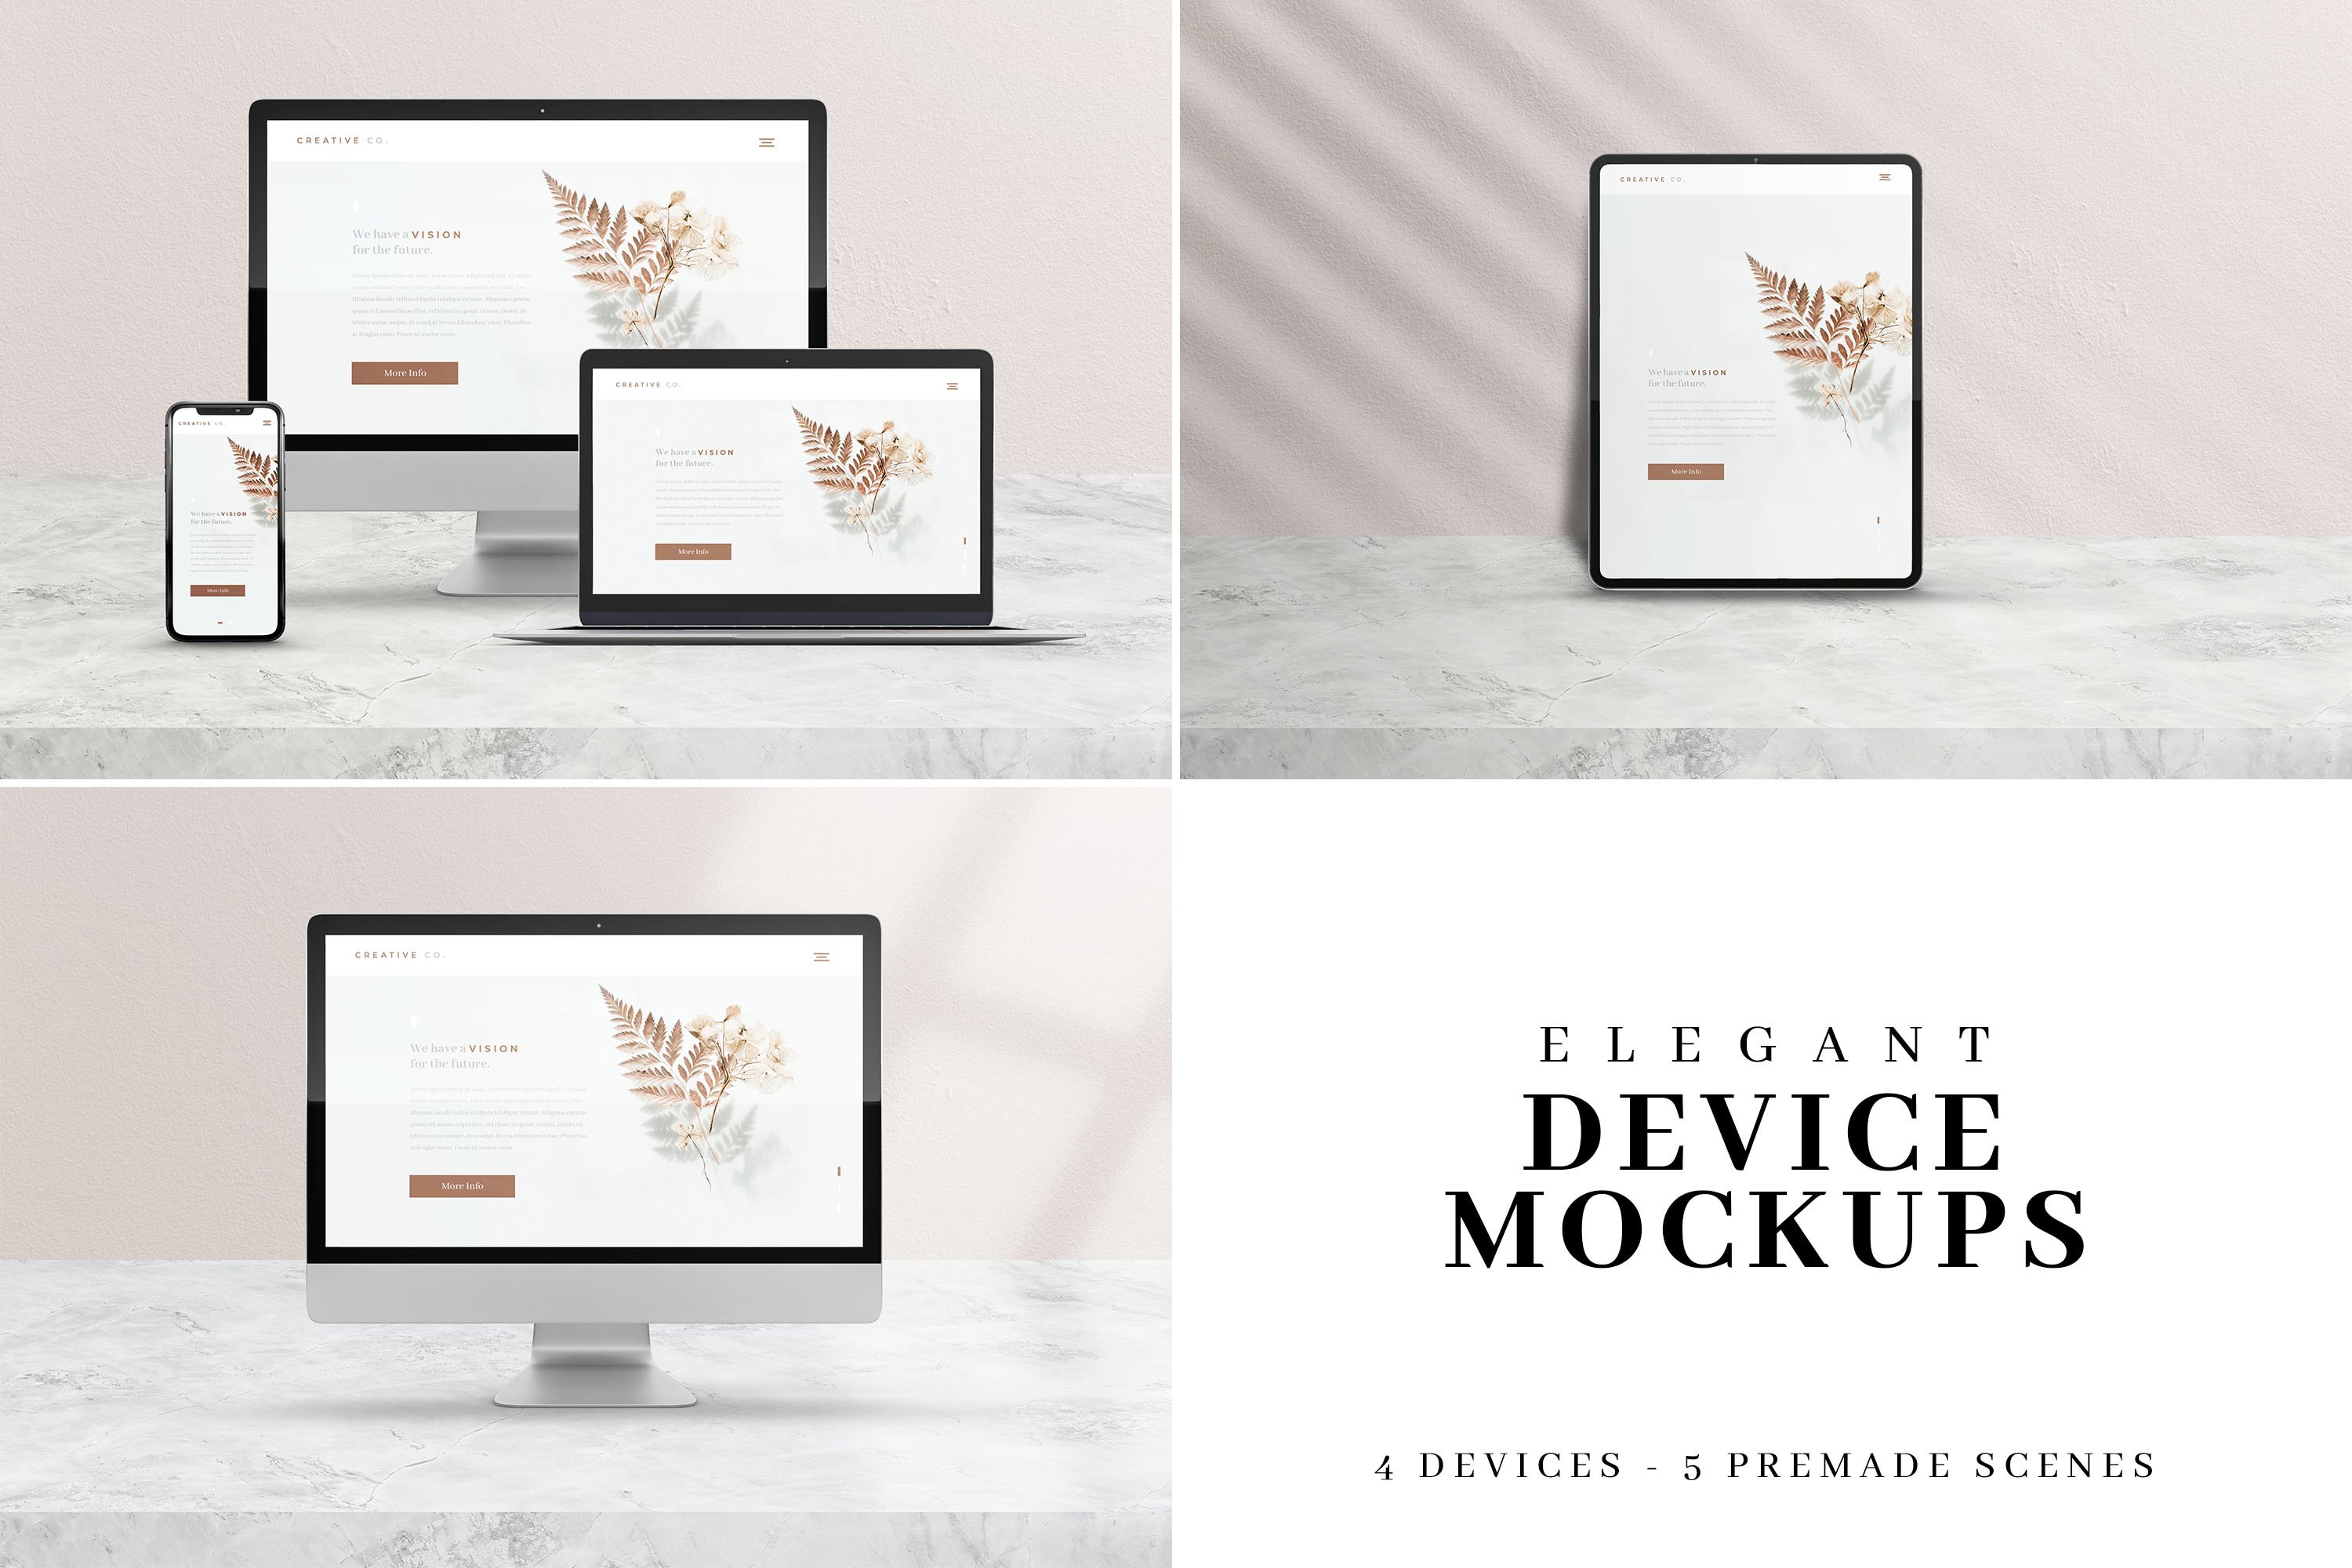 Elegant & Classy Device Mockups cover image.